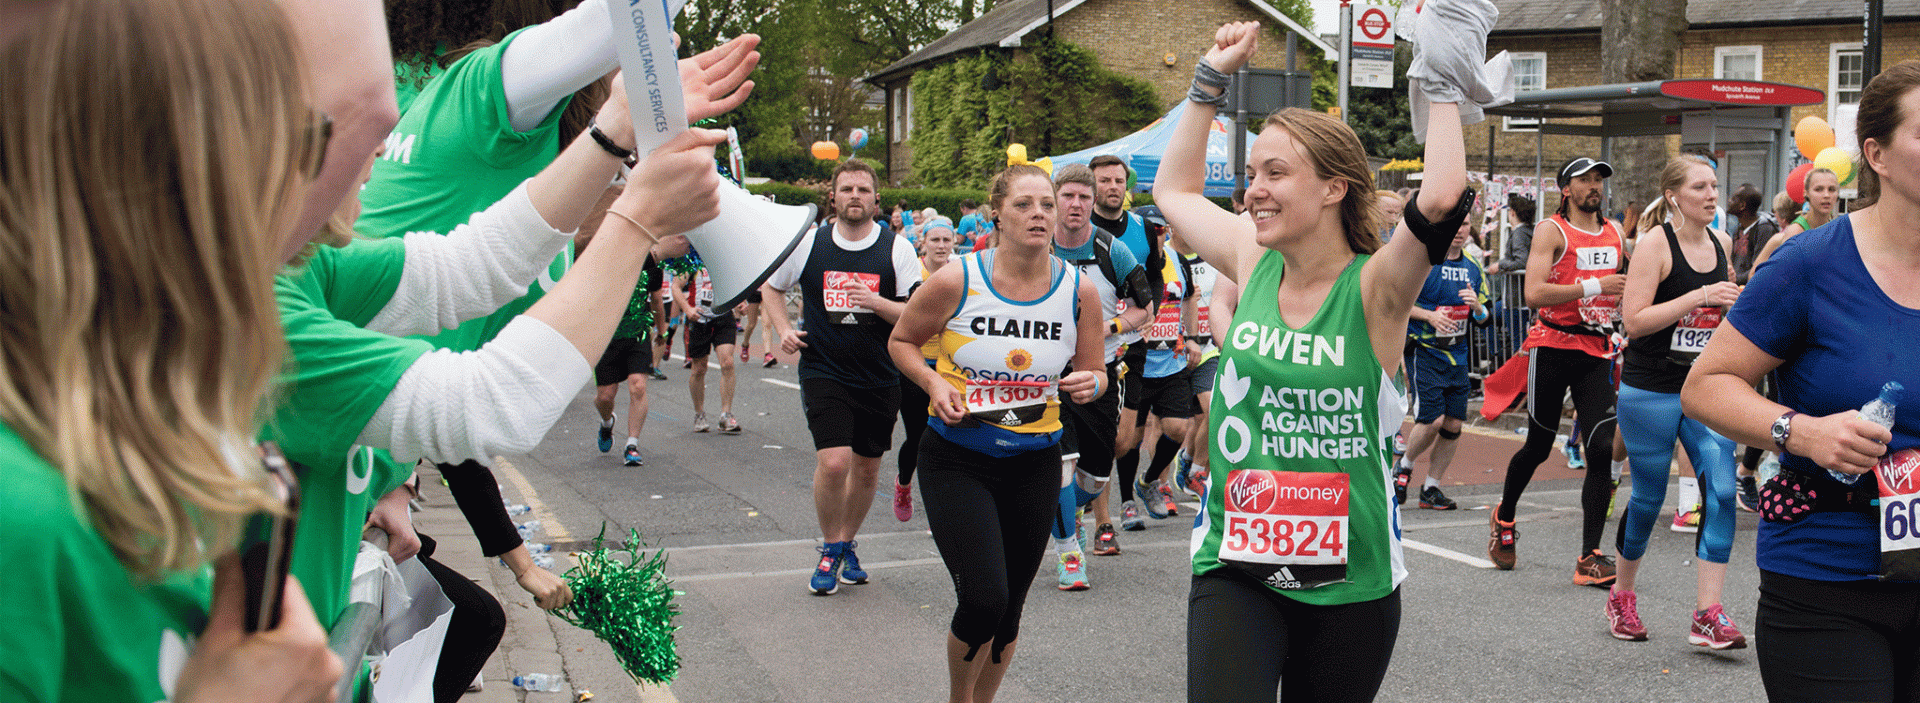 Gwen running London Marathon for Action Against Hunger